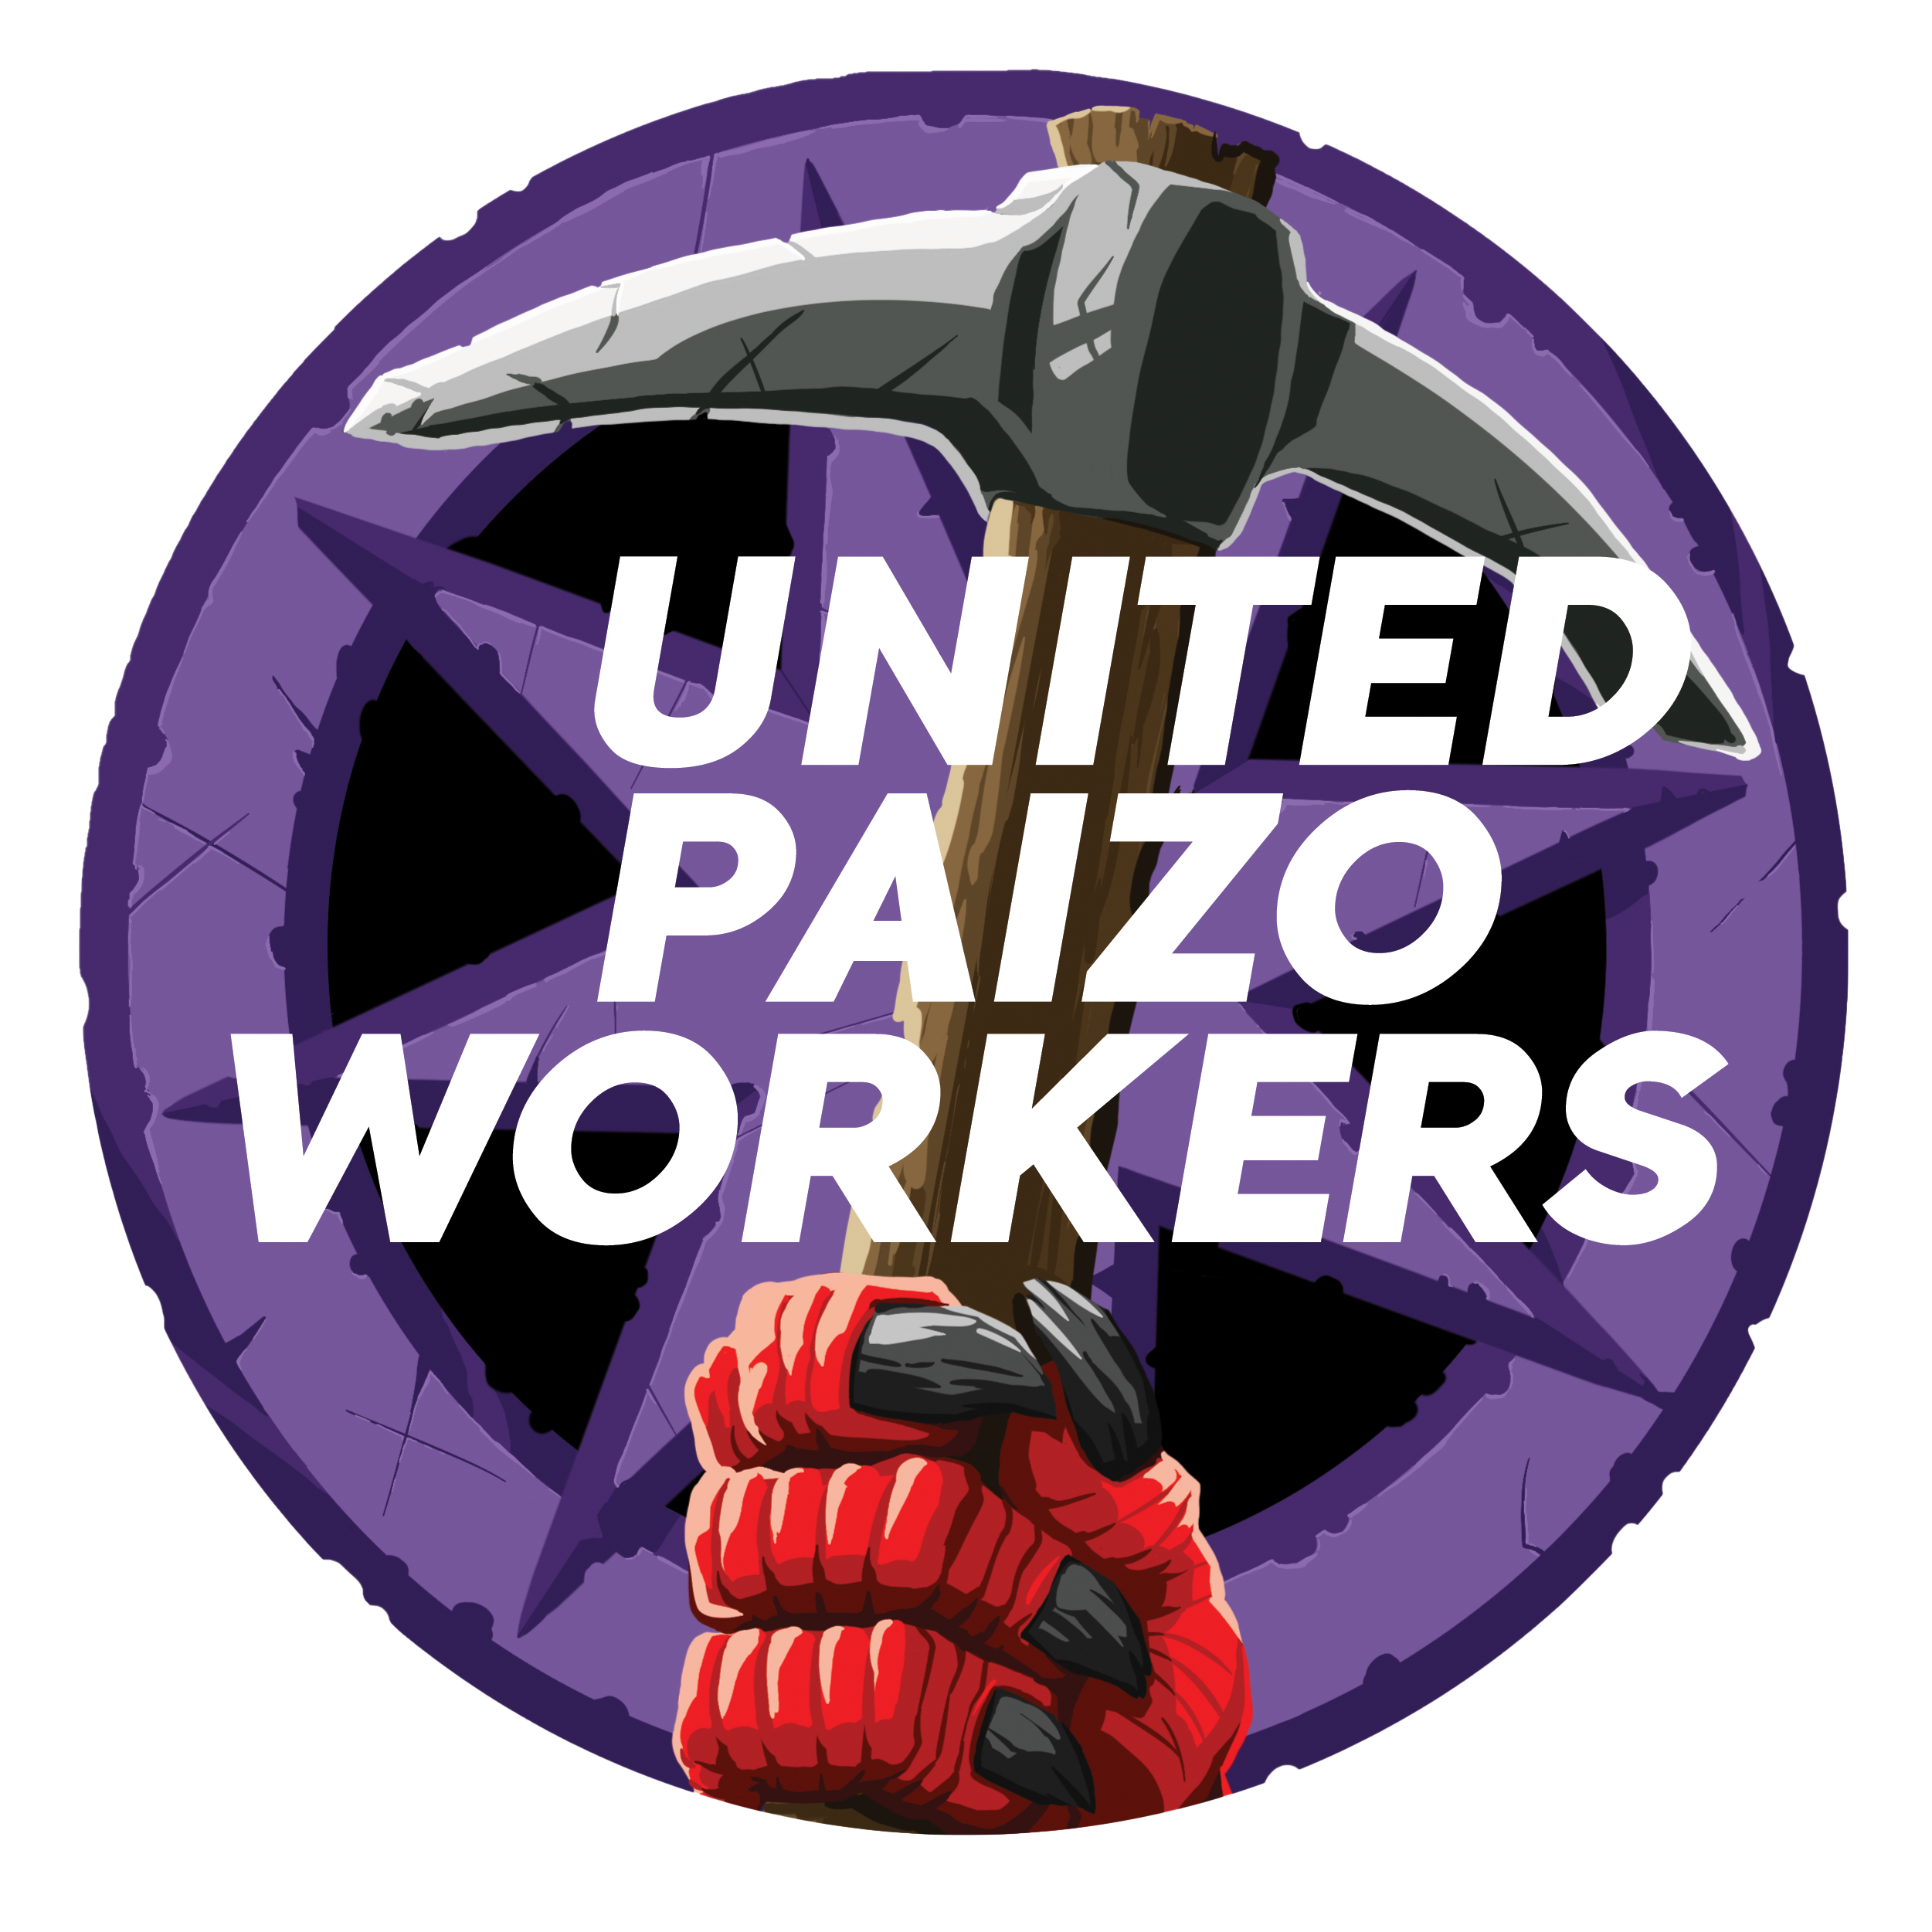 United Paizo Workers Logo - Web - Large - Transparent Background.png